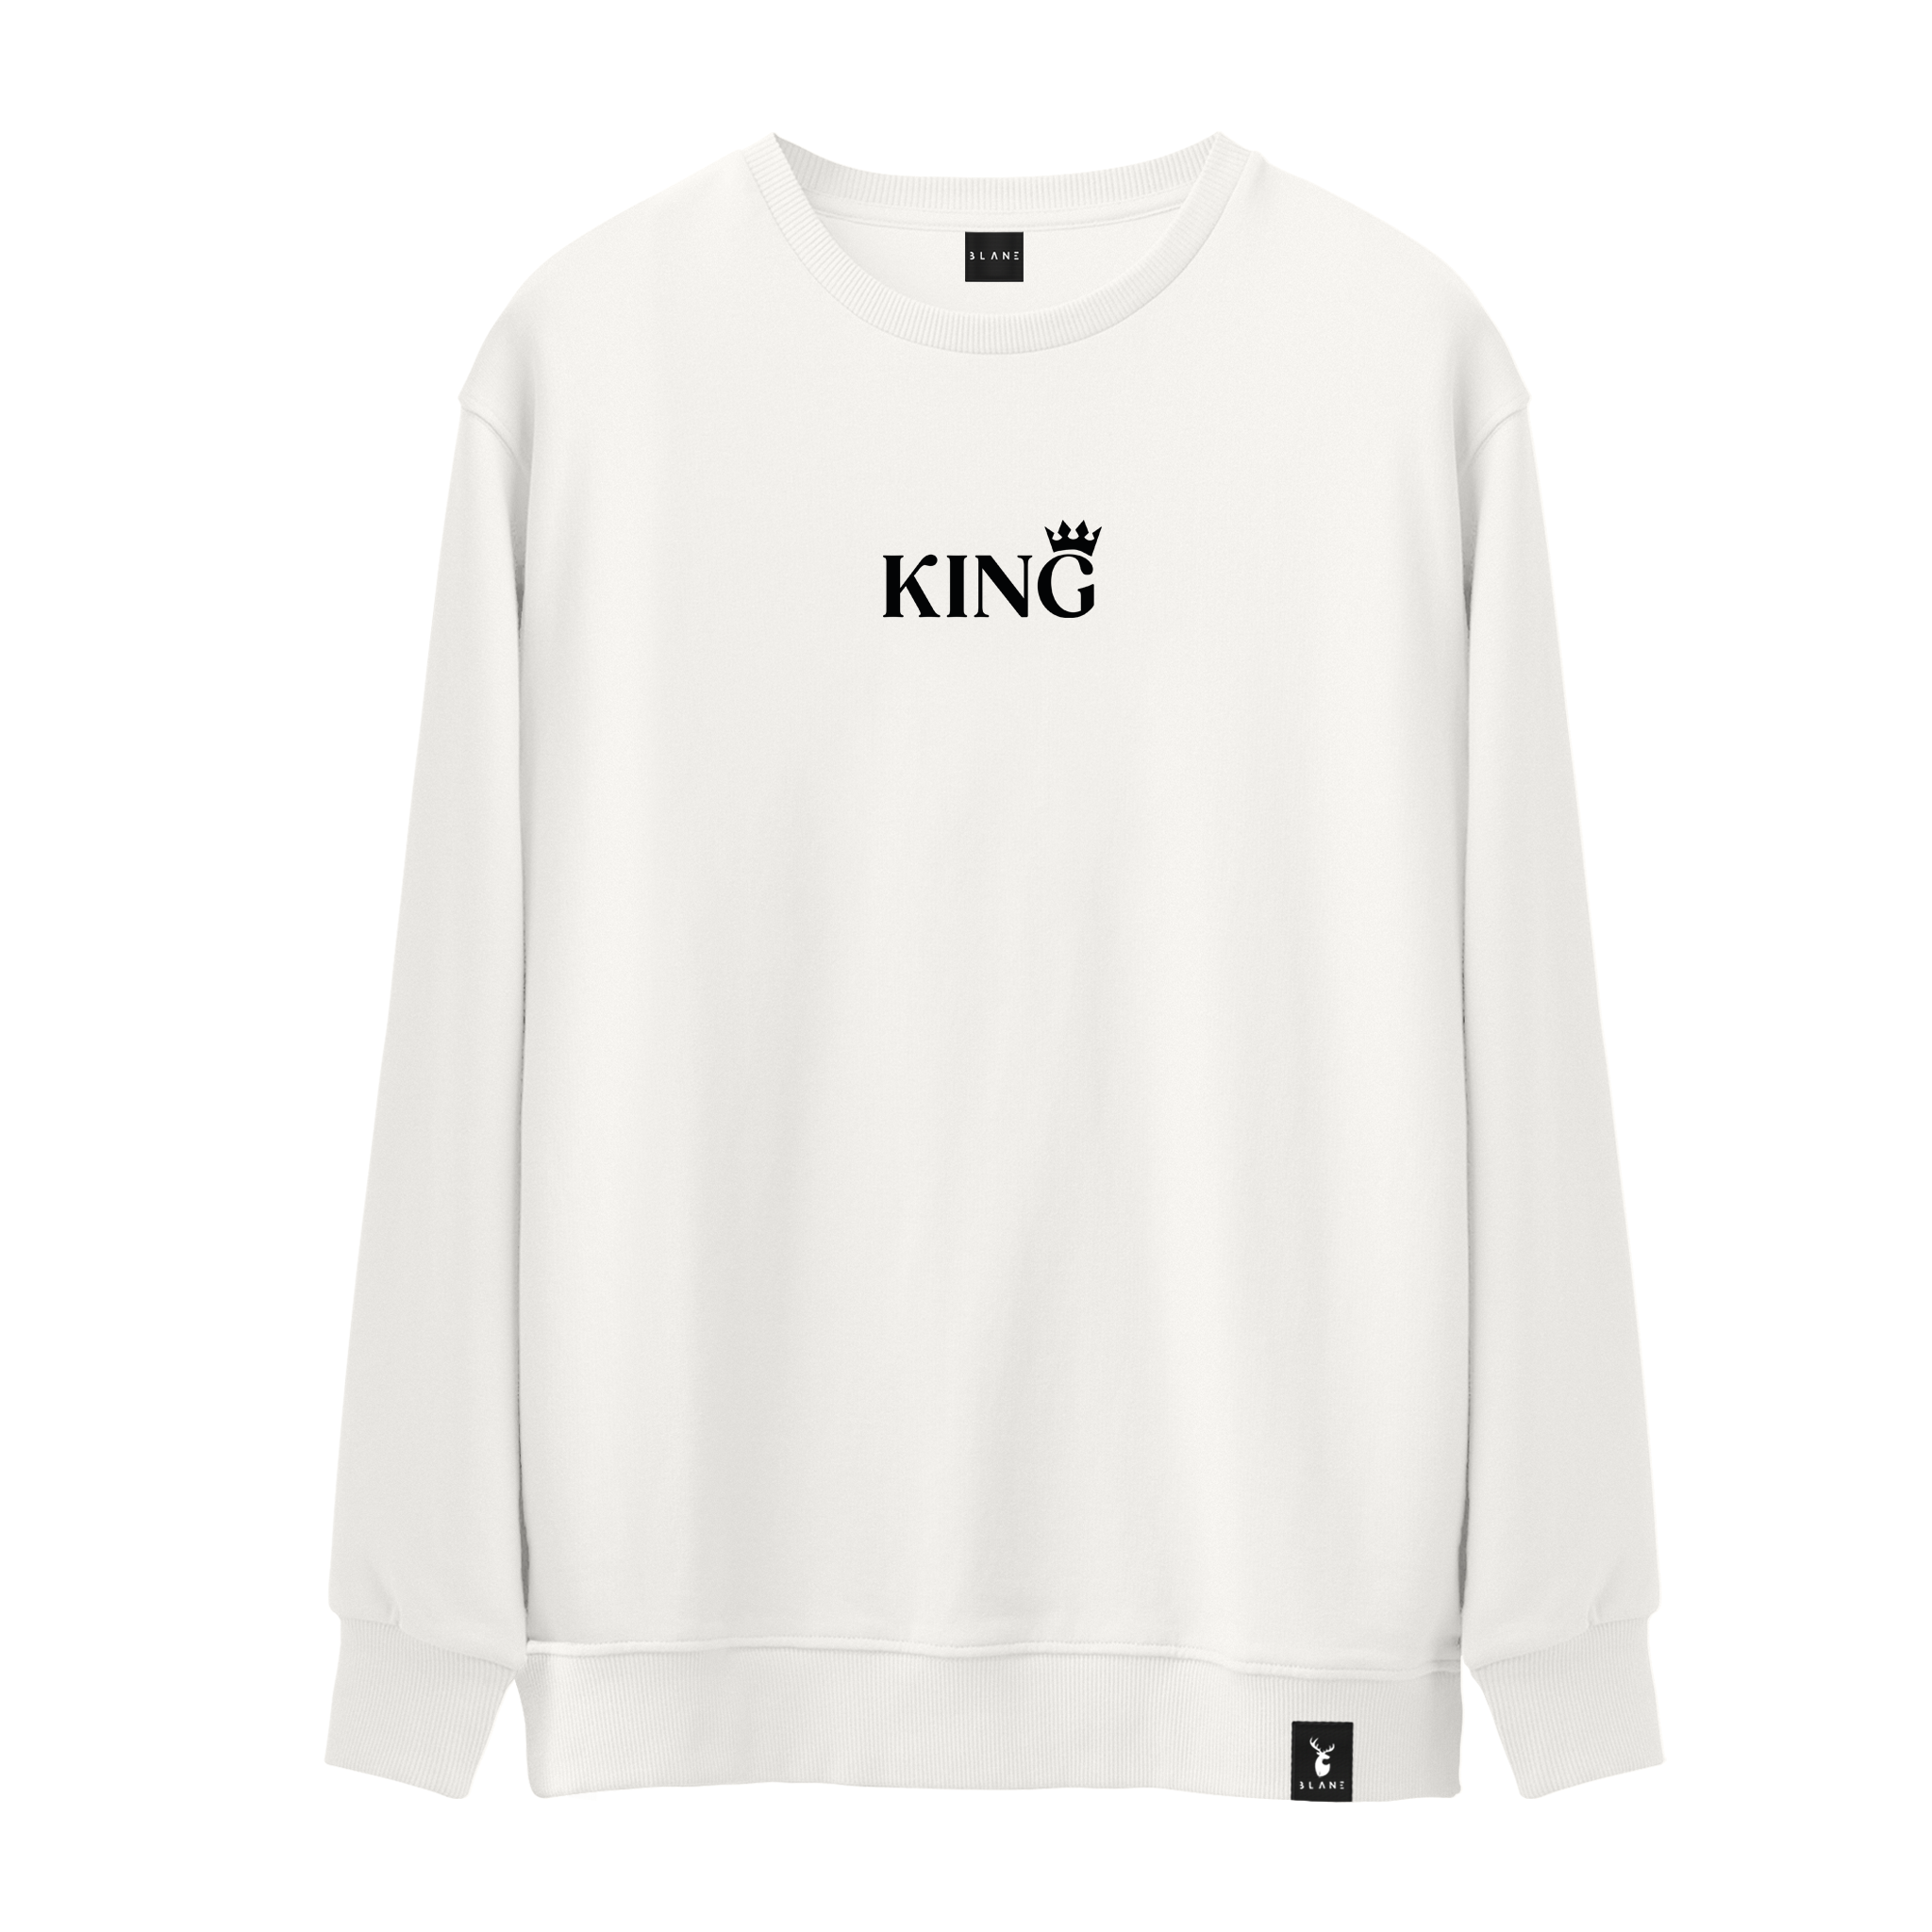 King - Sweatshirt